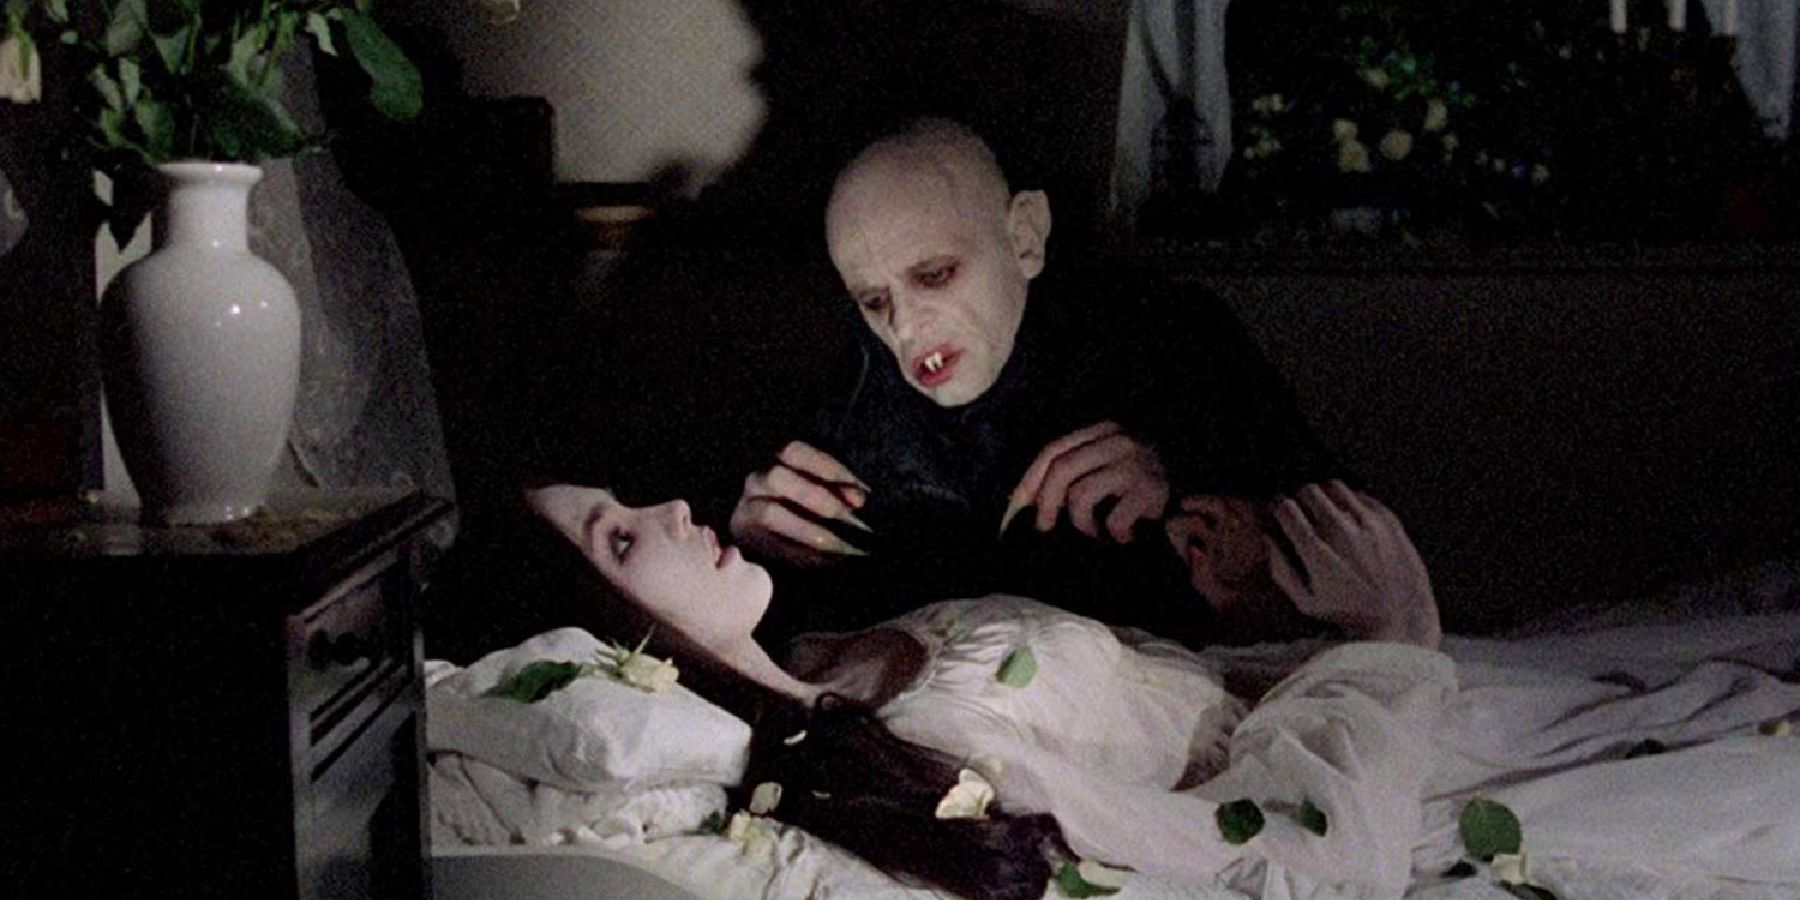 Nosferatu the Vampyre movie screenshot Count Orlok bearing down on victim